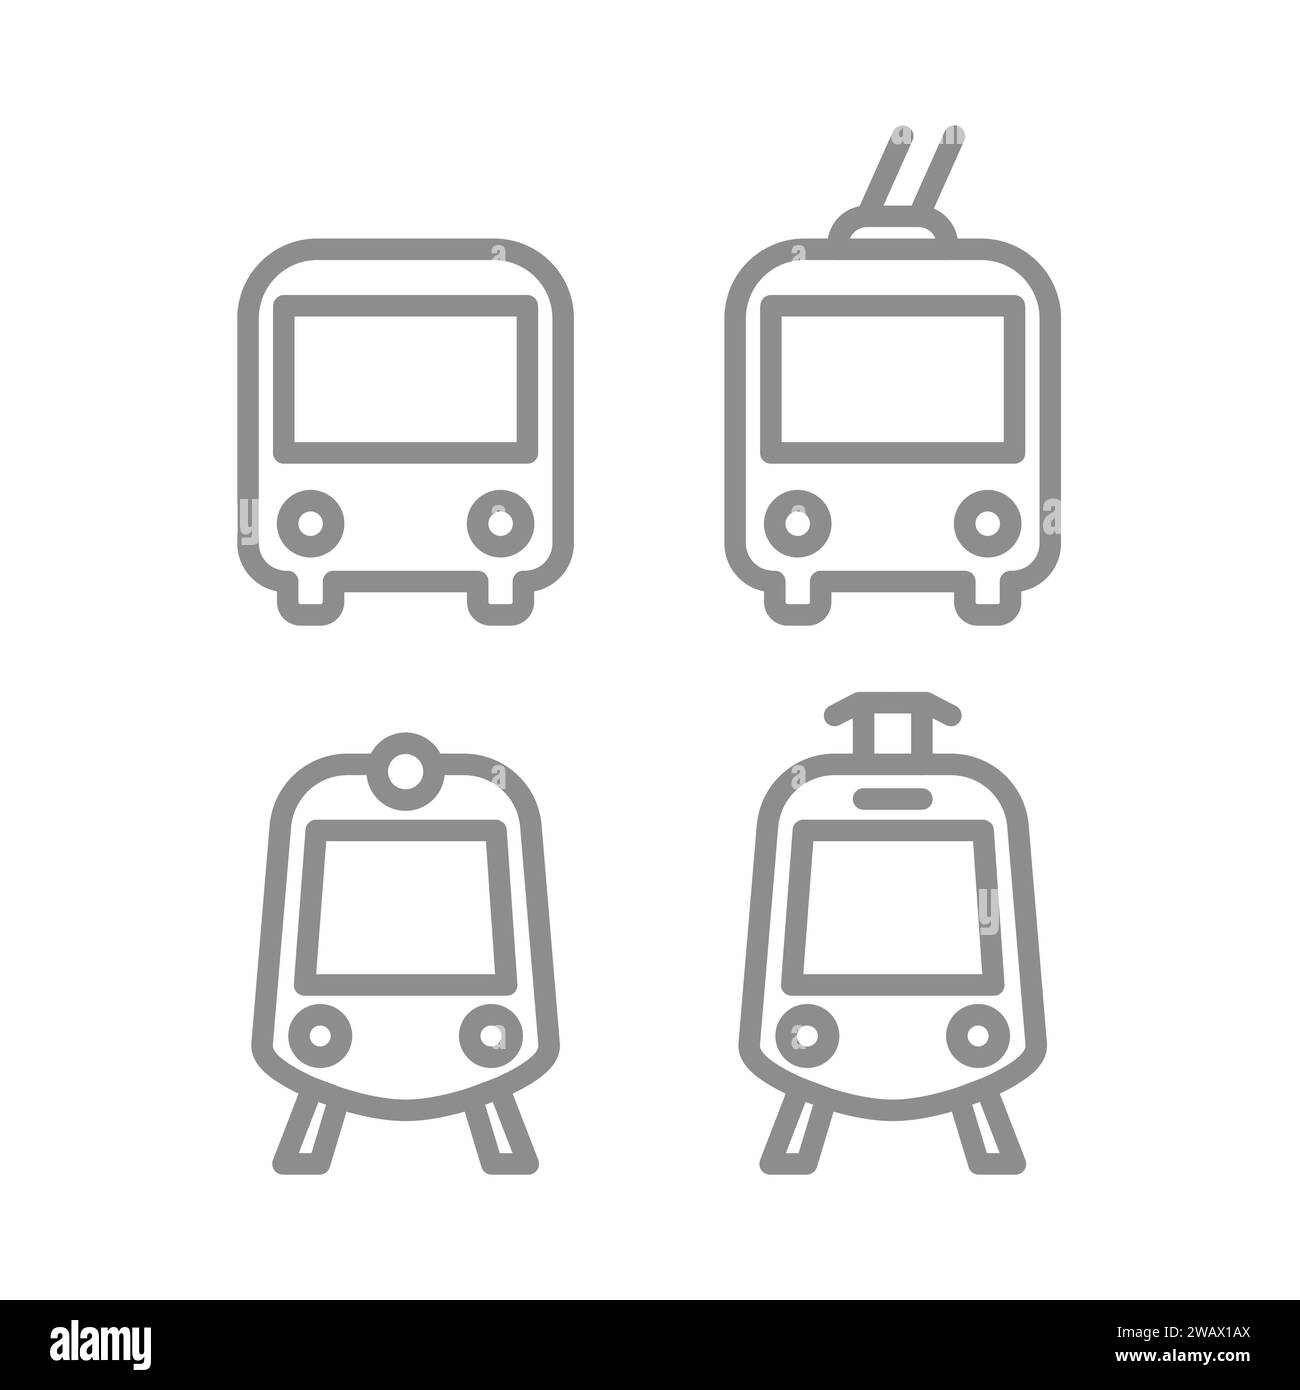 Public transport vector icons. Bus, tram, train and metro icon set. Editable stroke. Stock Vector